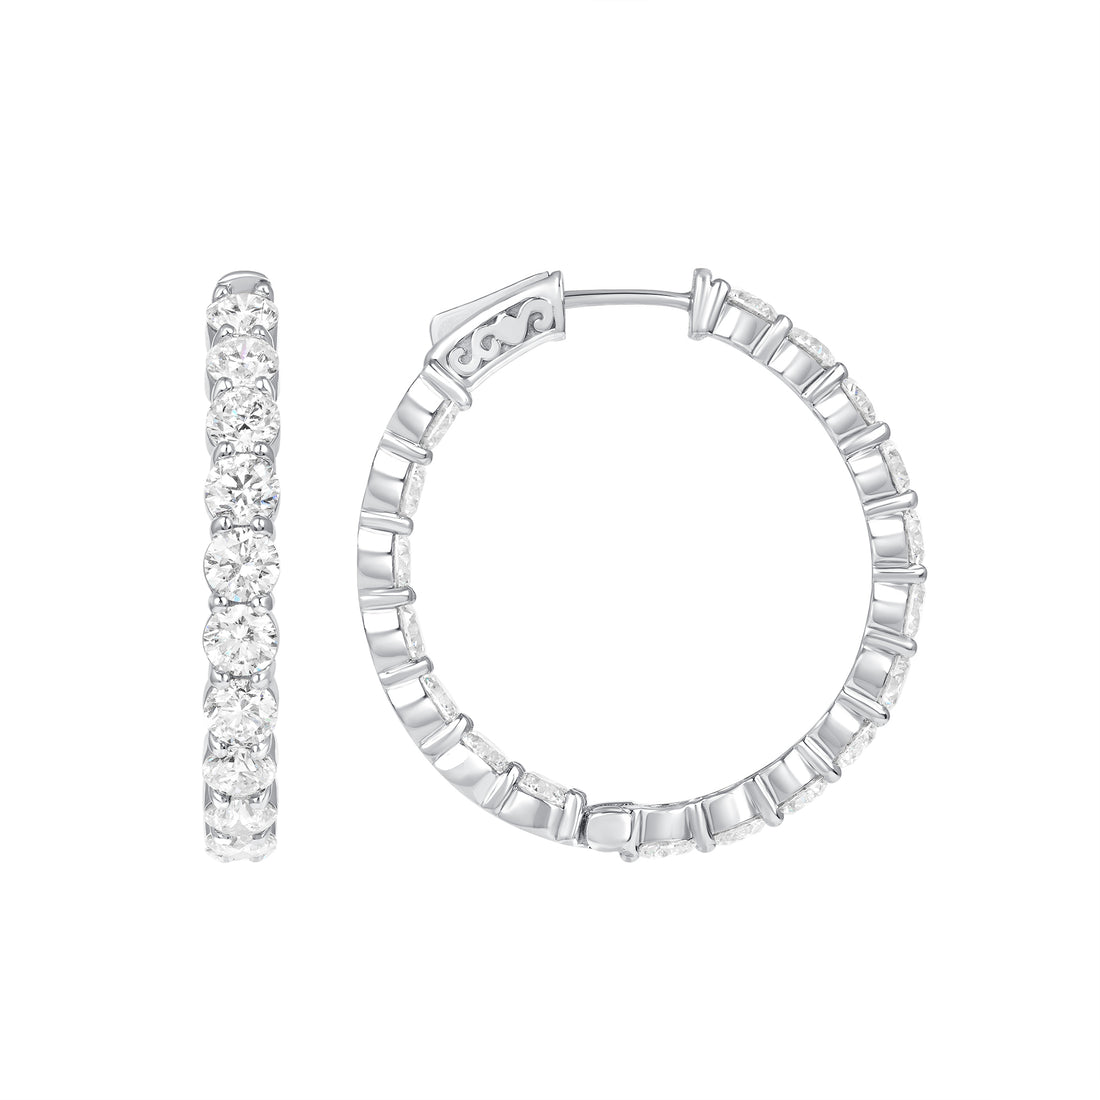 8.46 CT. Round Brilliant Diamond Hoop Earrings in 14K White Gold